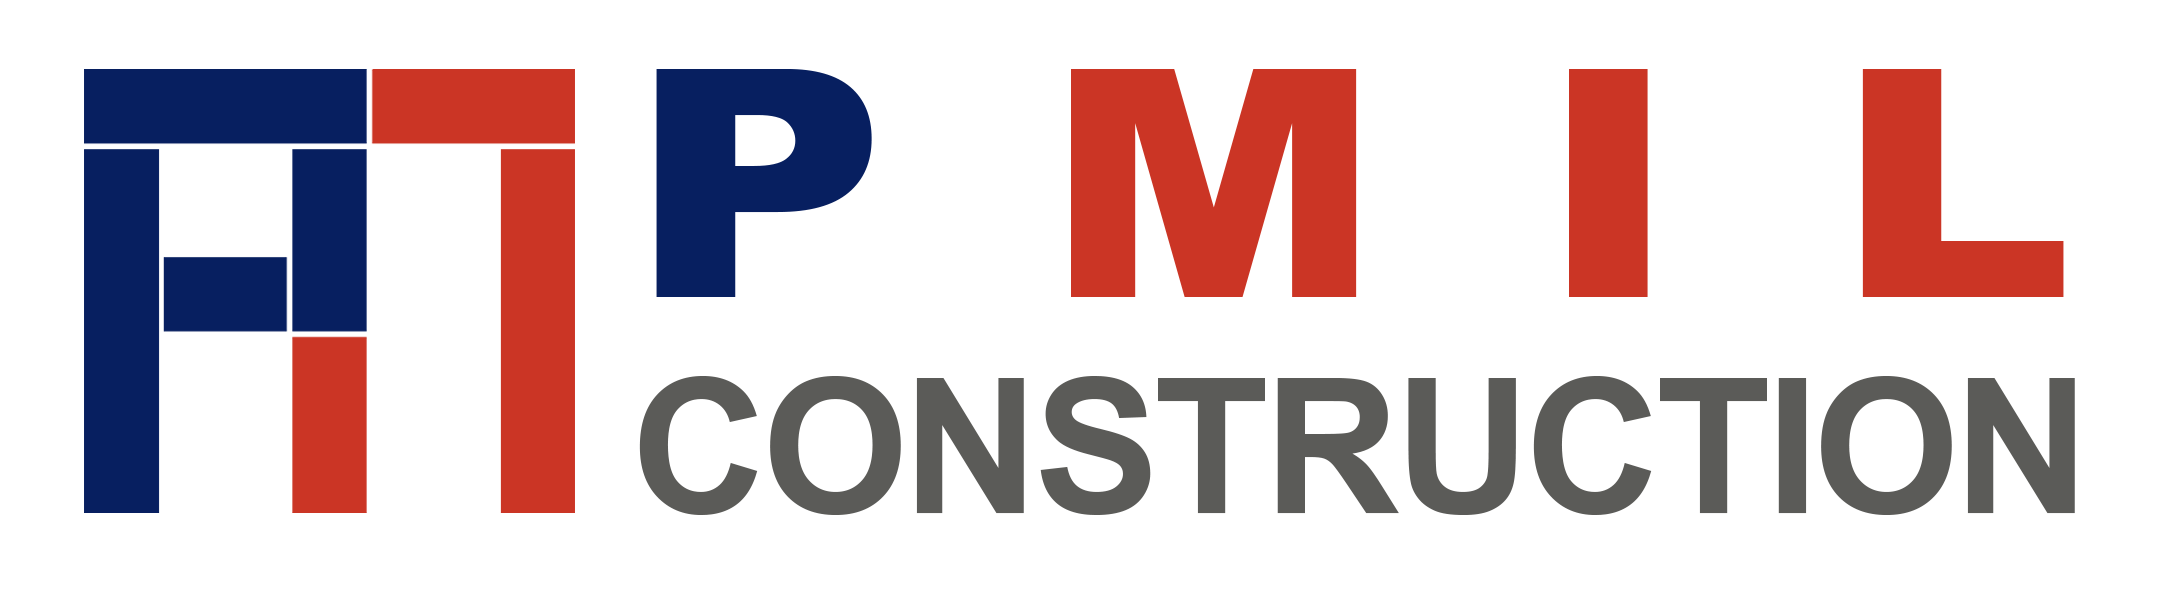 PMIL Construction